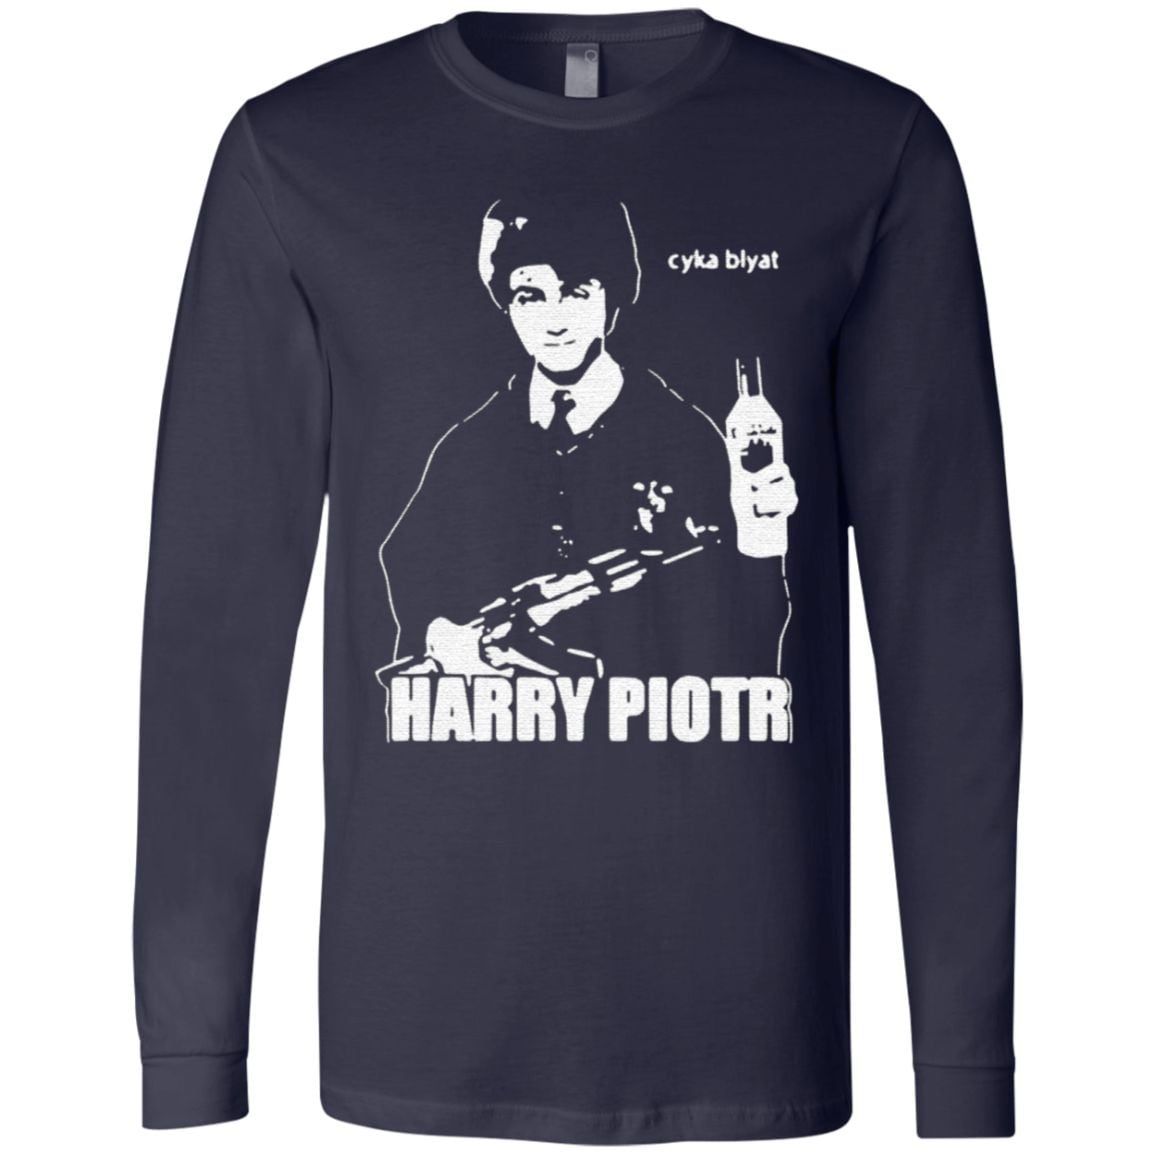 Harry Piotr Cyka Blyat T Shirt